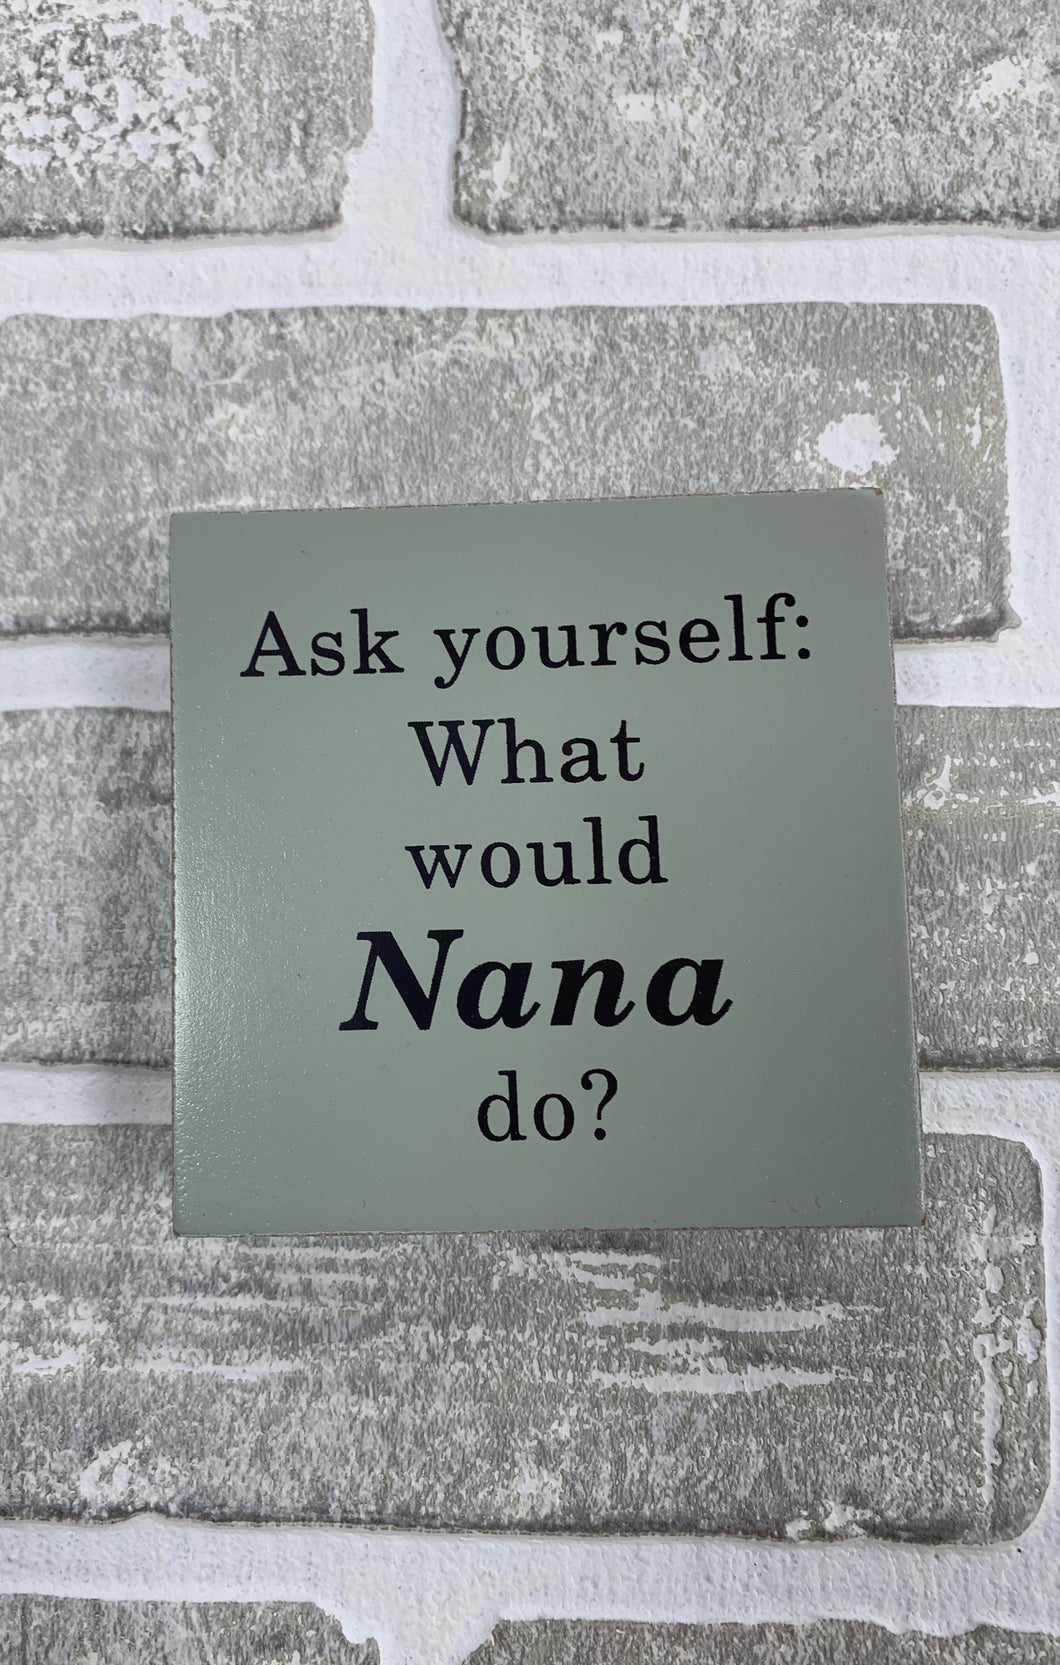 Nana sign